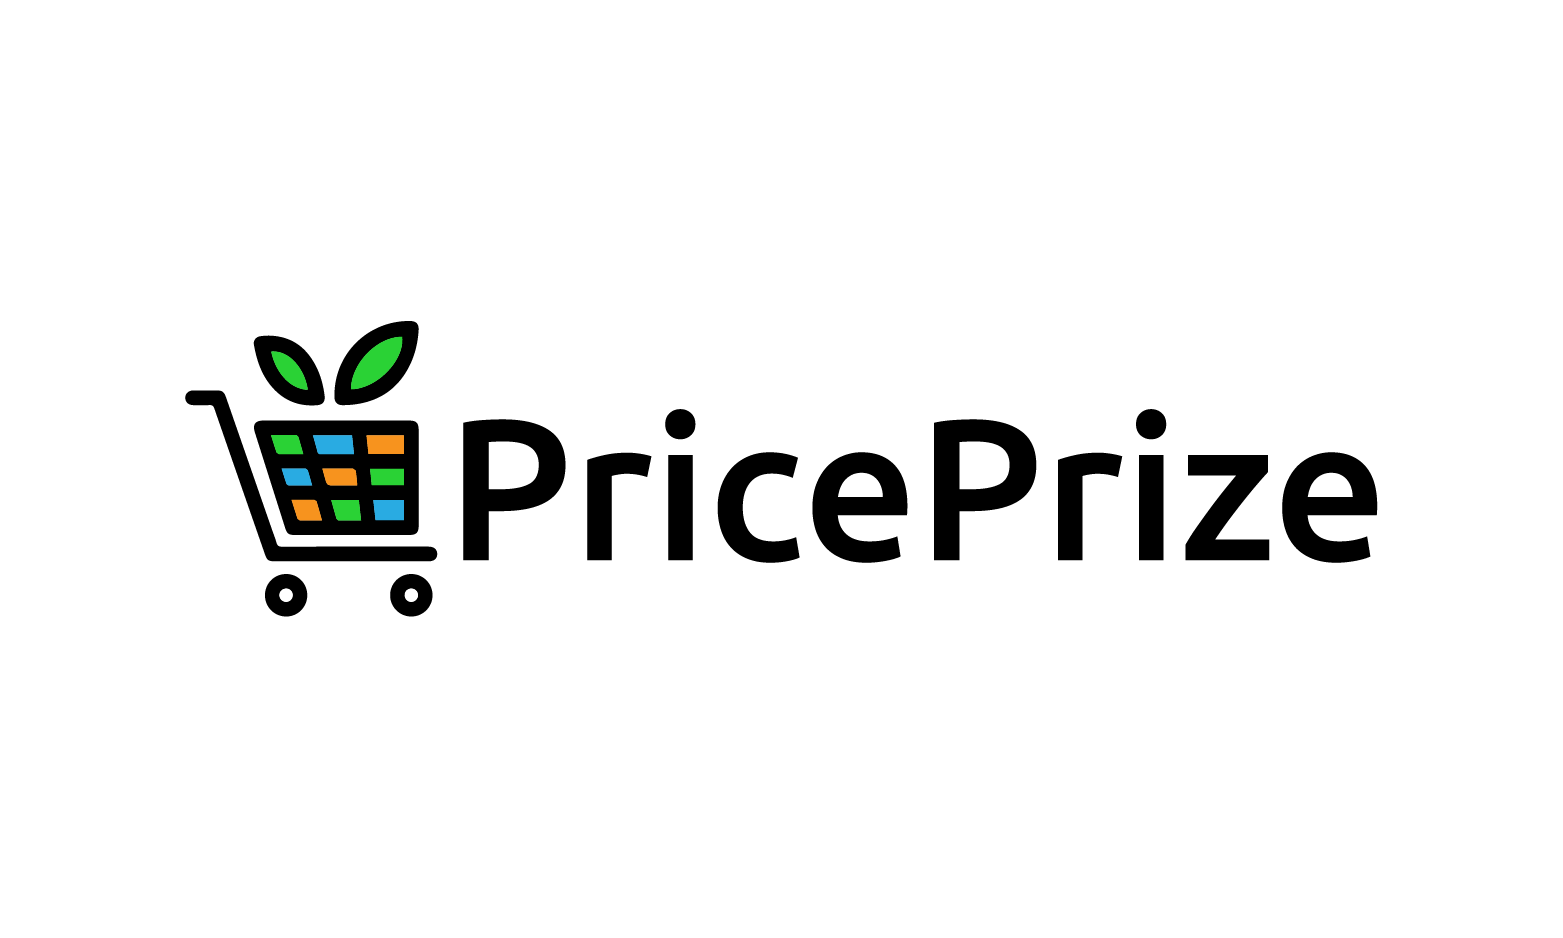 PricePrize.com - Creative brandable domain for sale